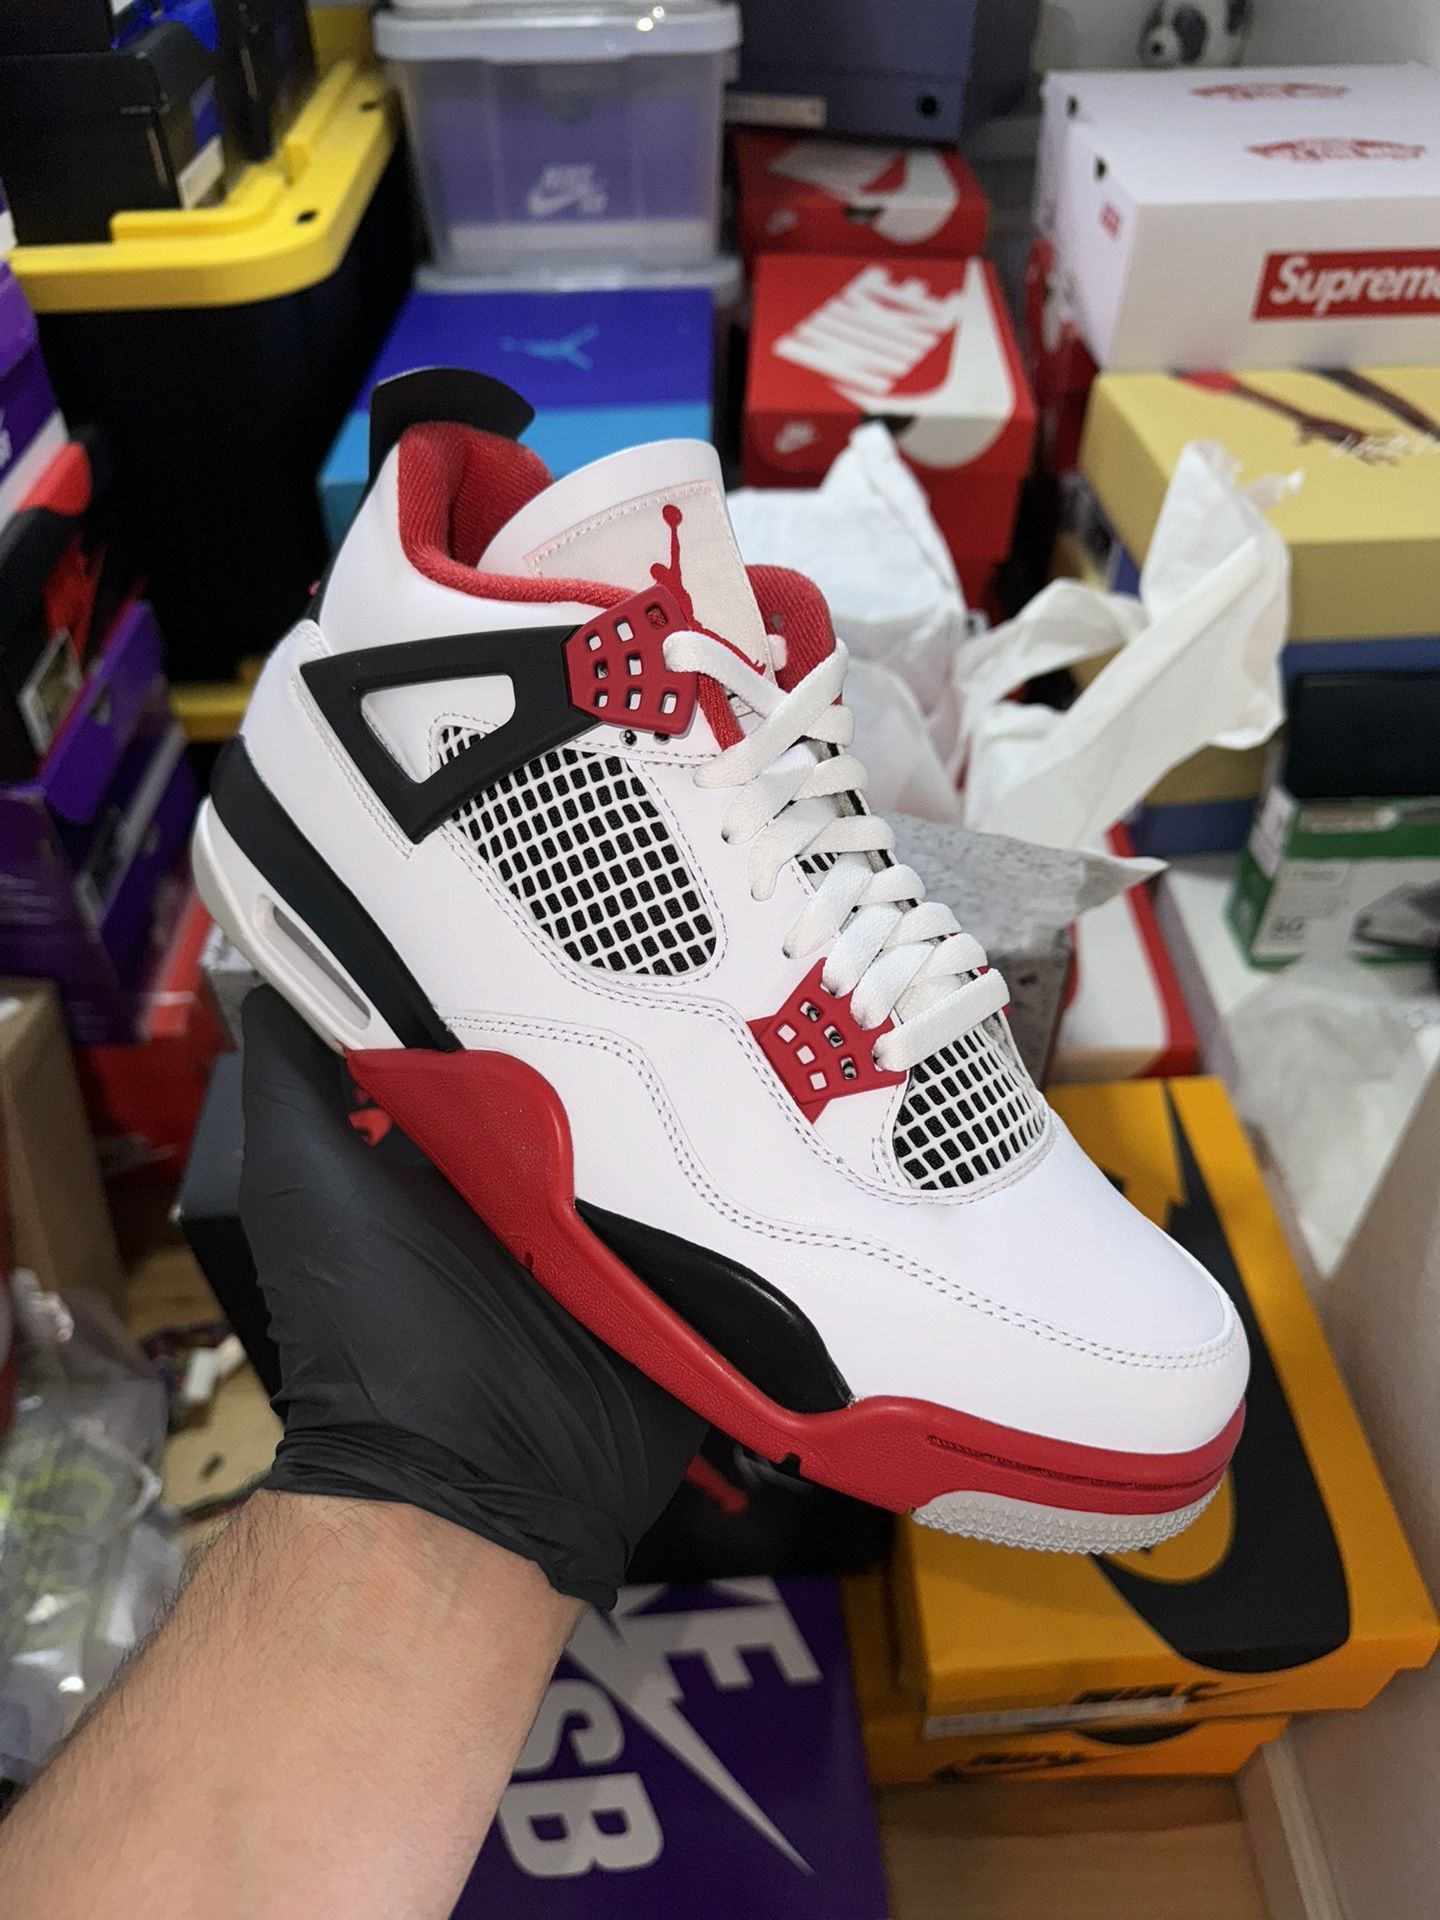 Fire Red Jordan 4 Size 9.5 Brand New